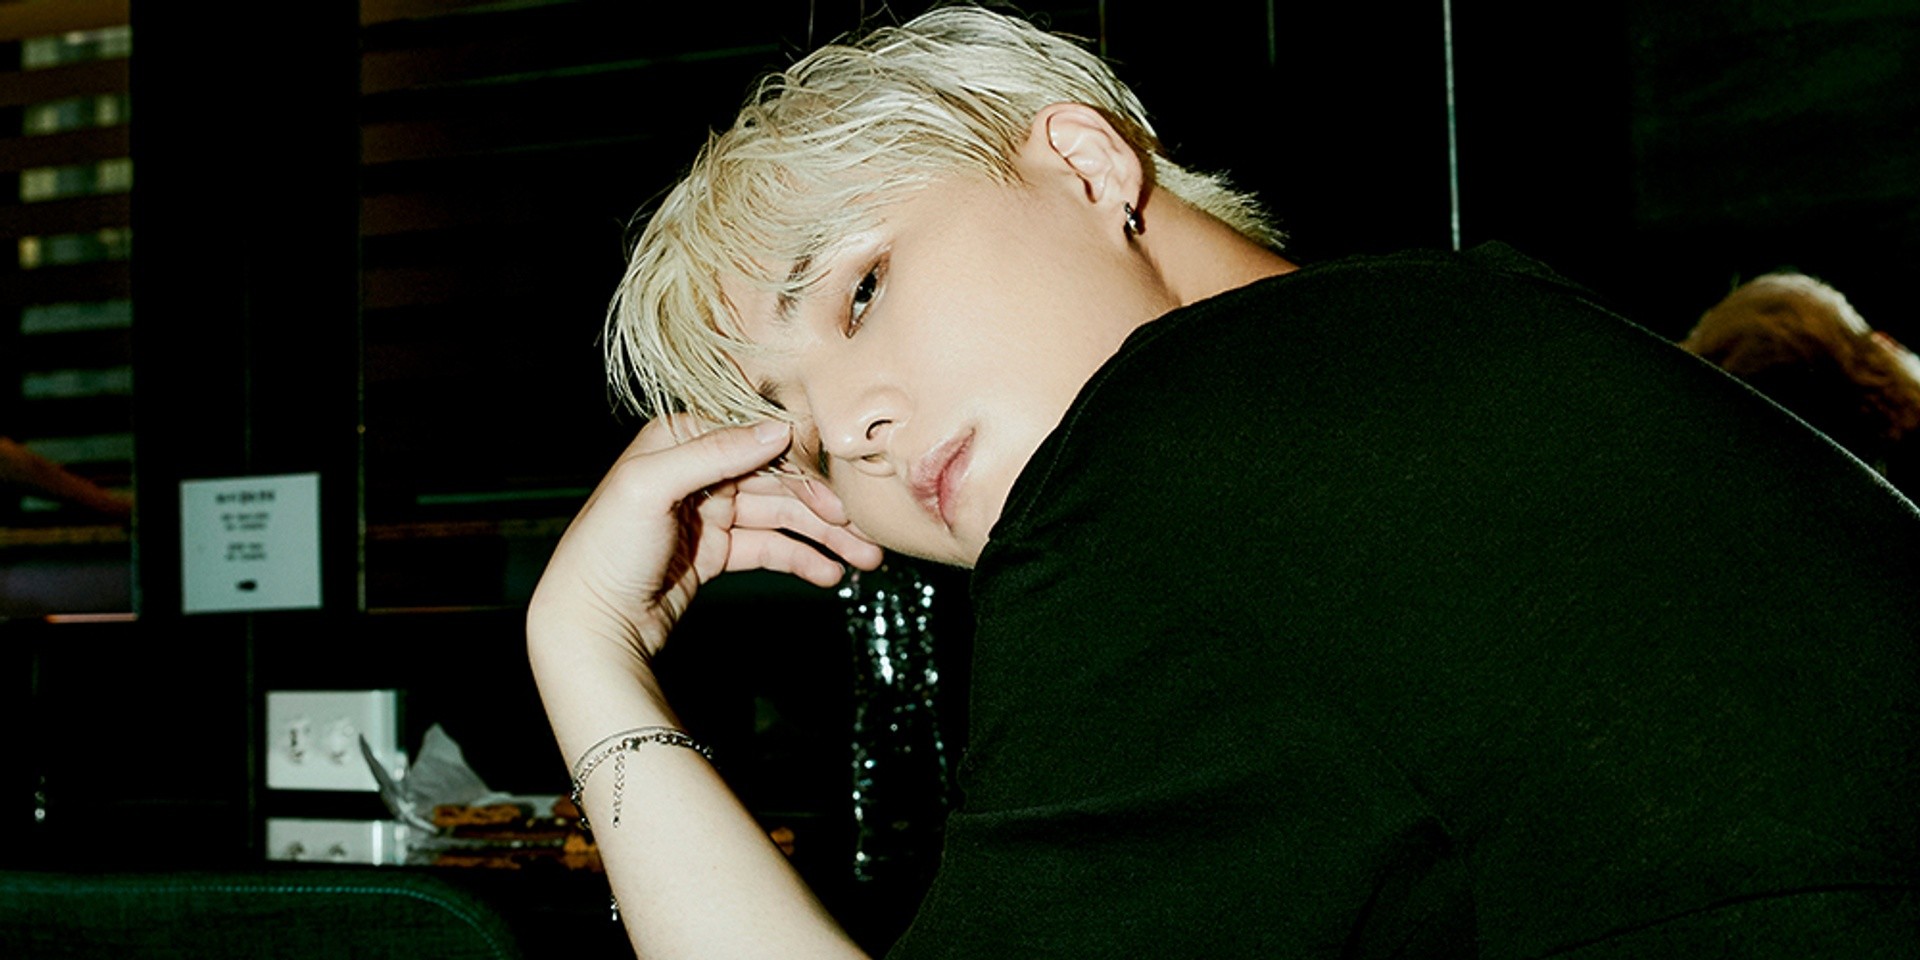 DAY6's Young K promises forever in debut mini-album 'Eternal' – listen